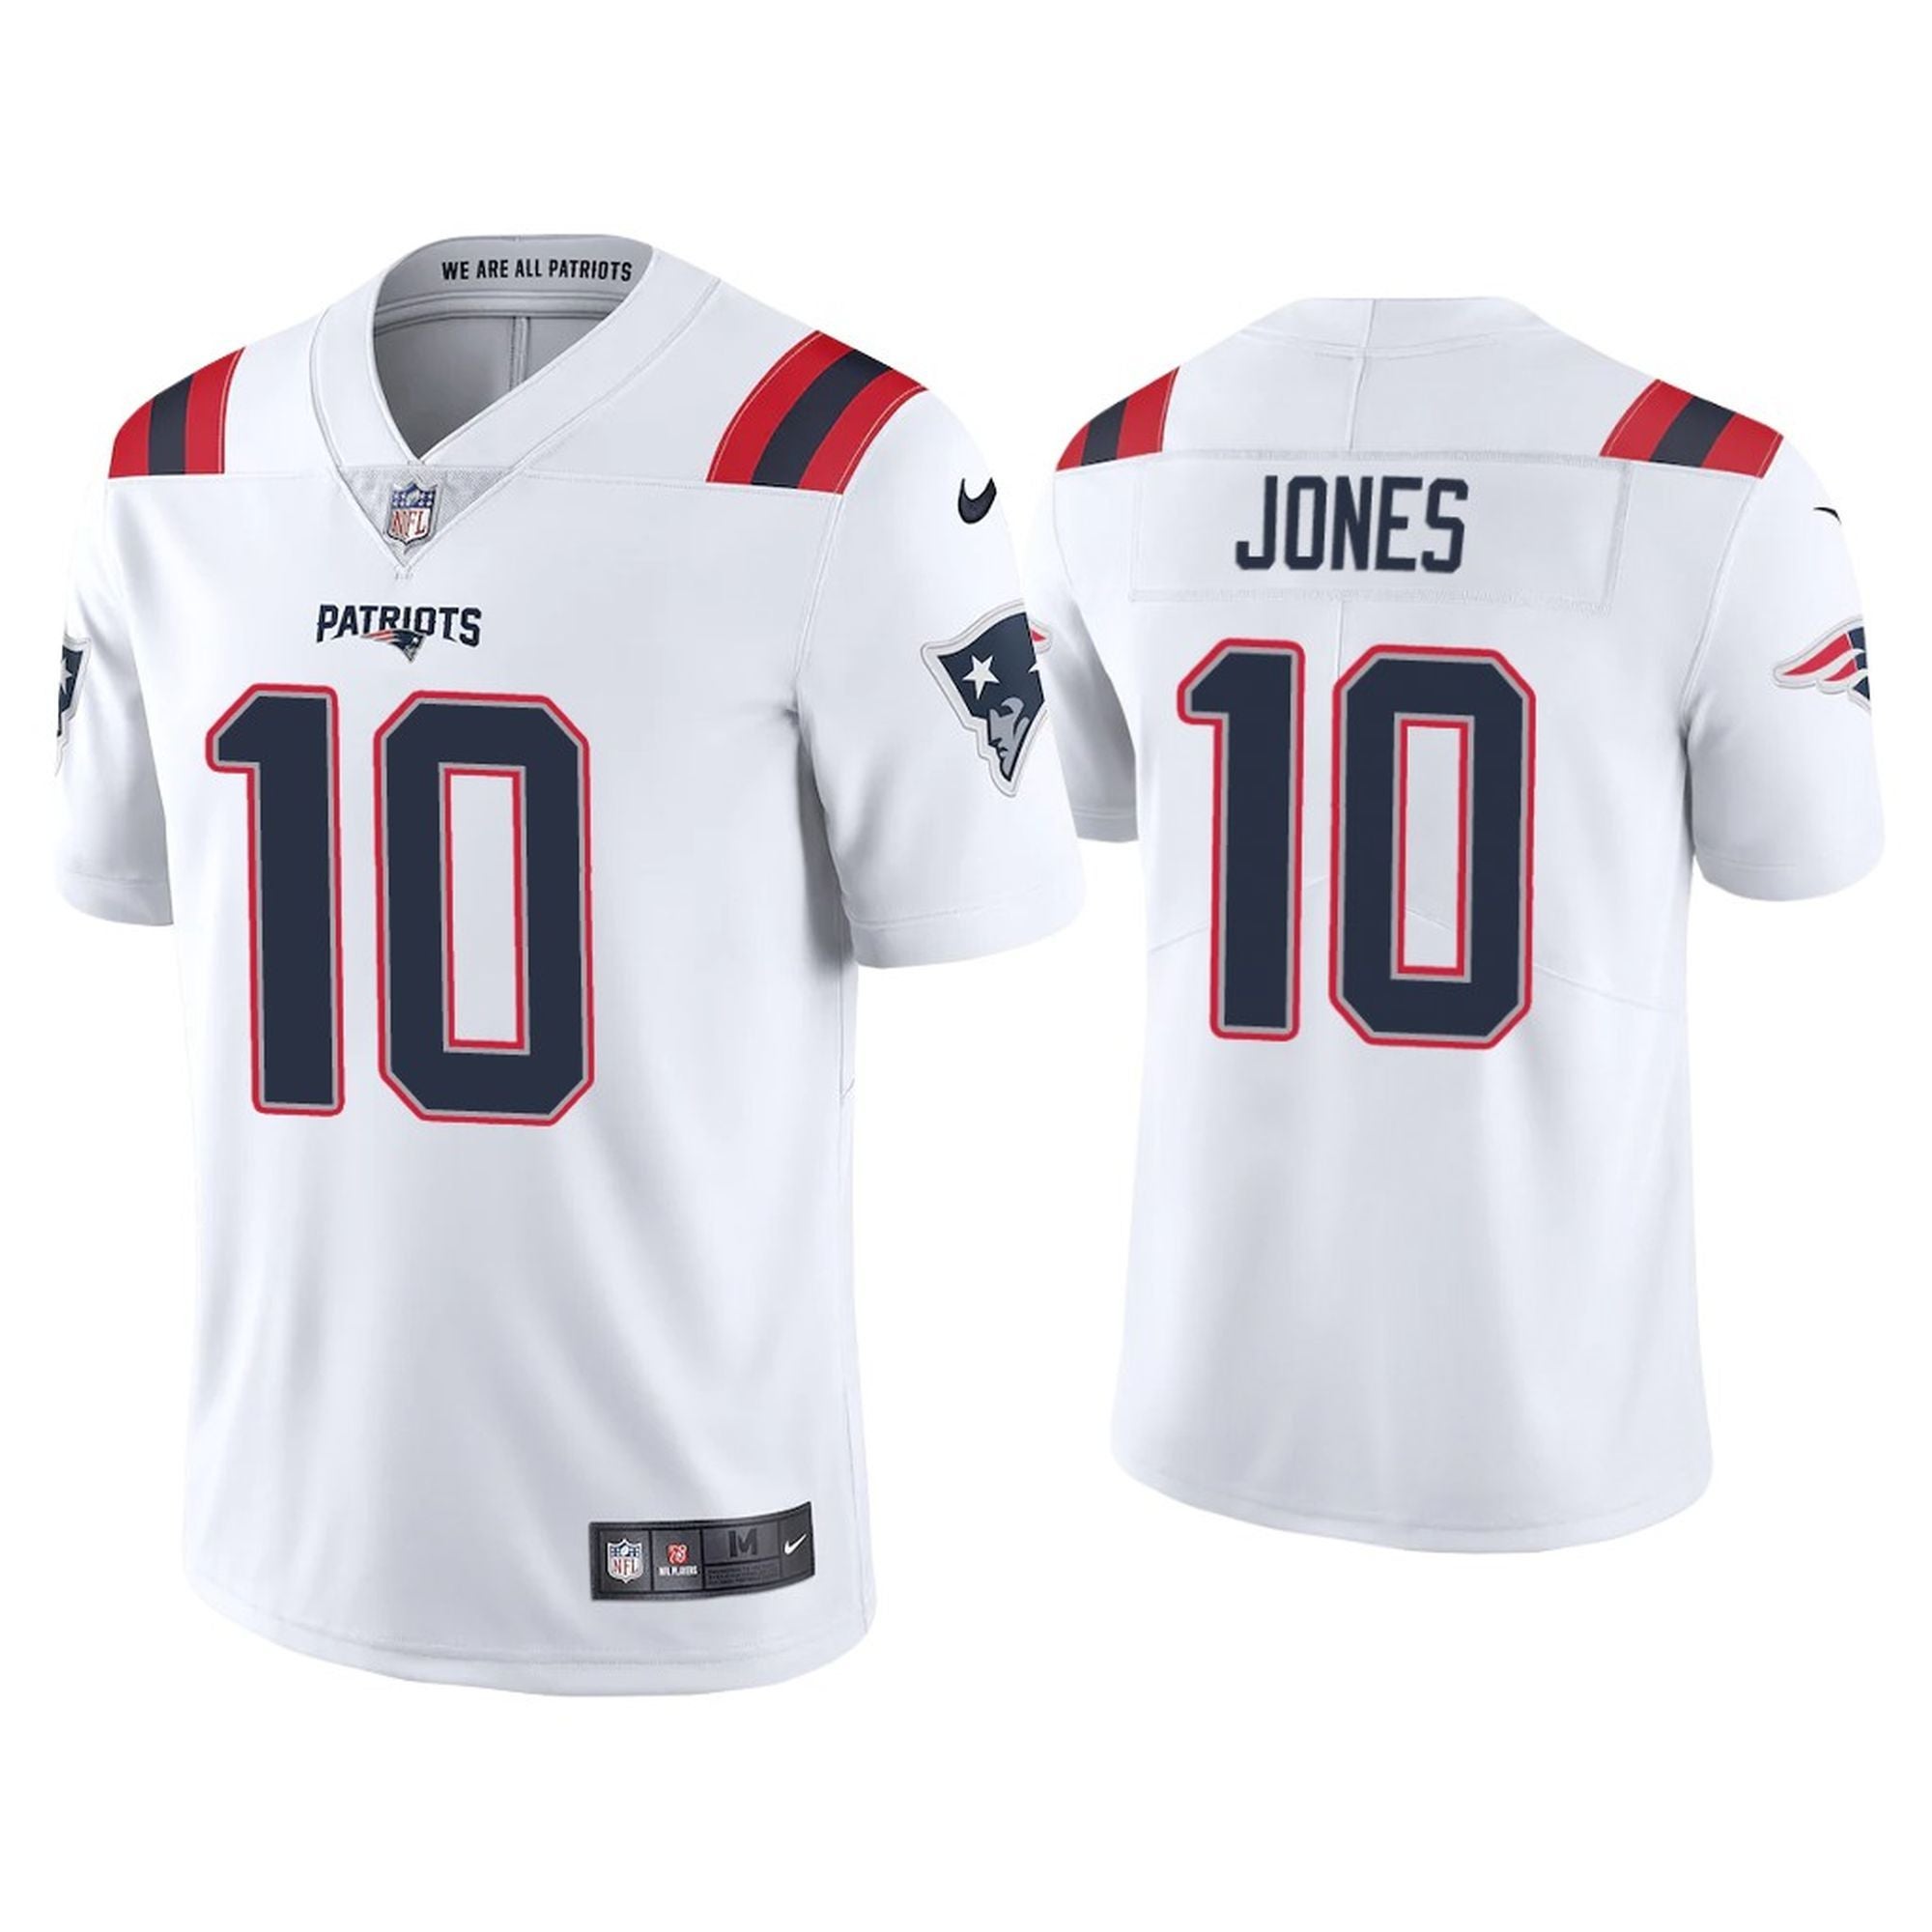 NFL New England Patriots (Mac Jones) Women's Game Football Jersey.